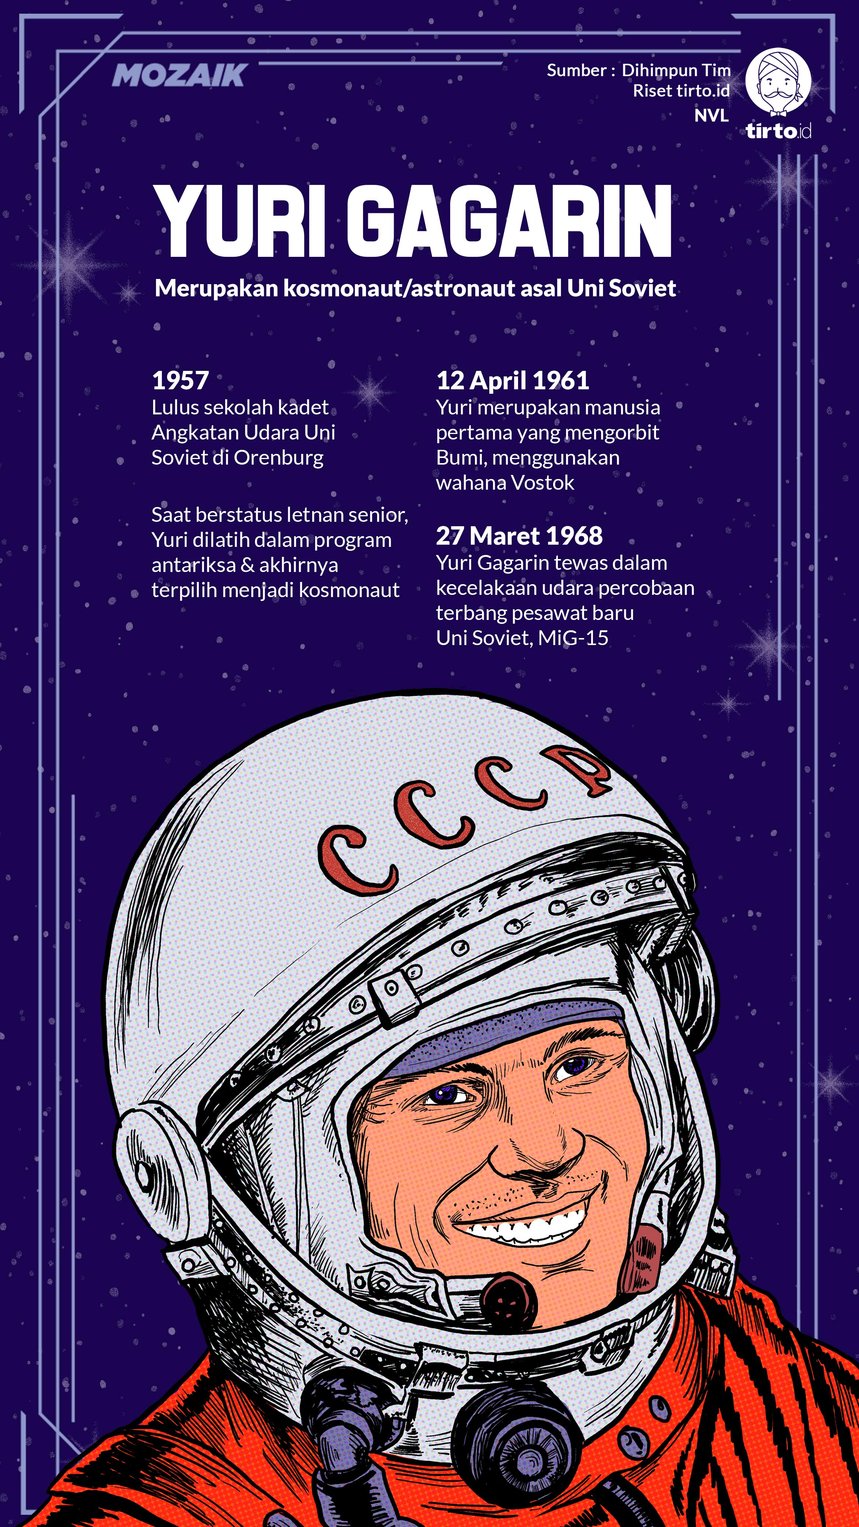 Infografik Mozaik Yuri Gagarin